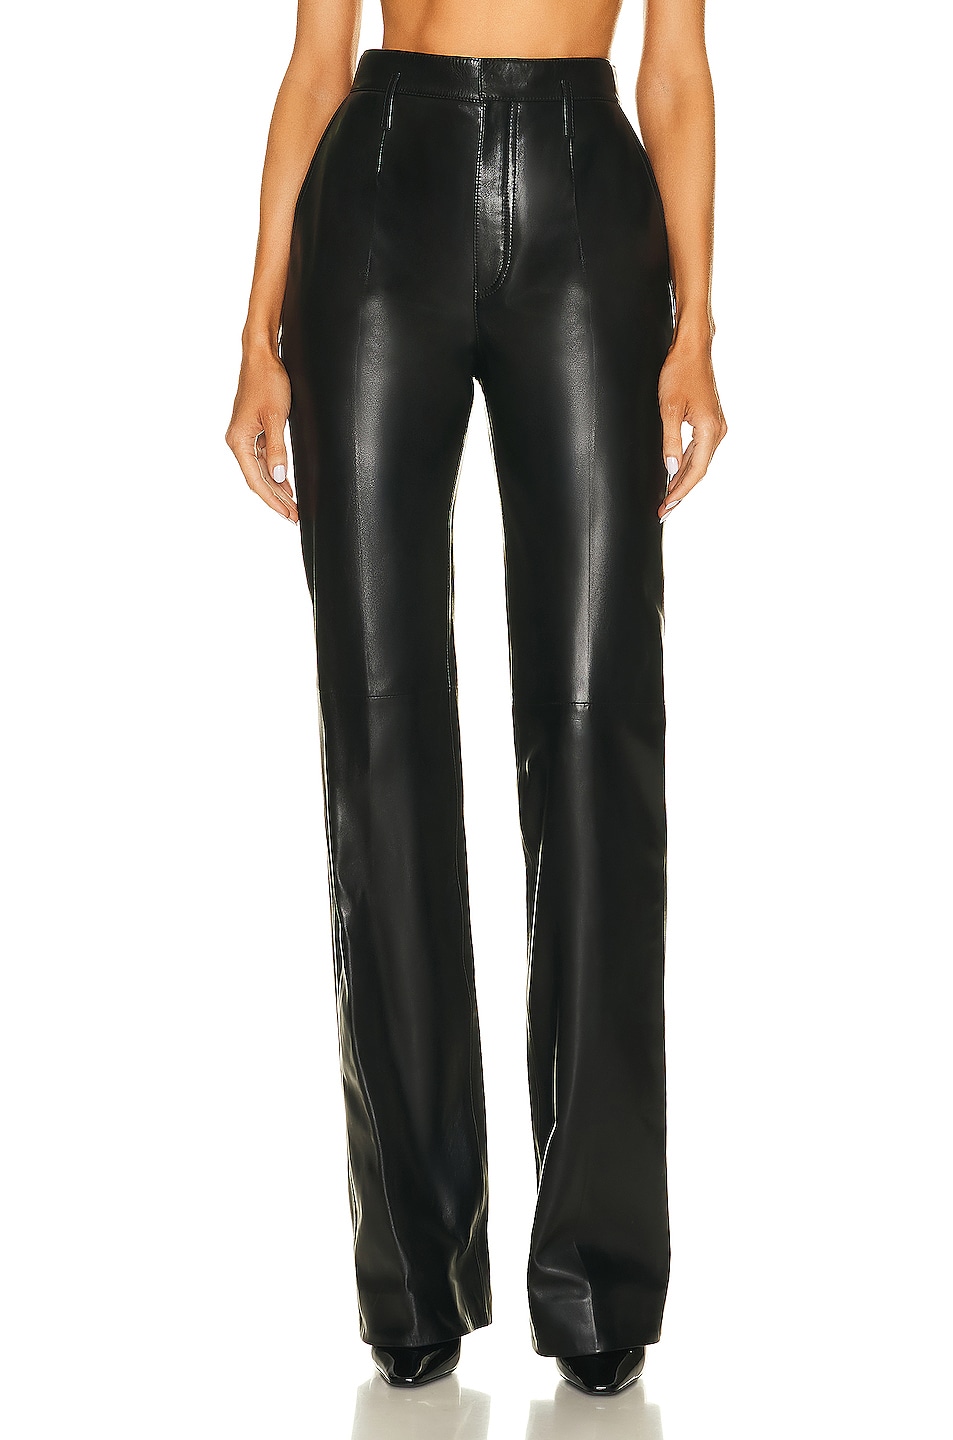 Saint Laurent Leather Pant in Black | FWRD